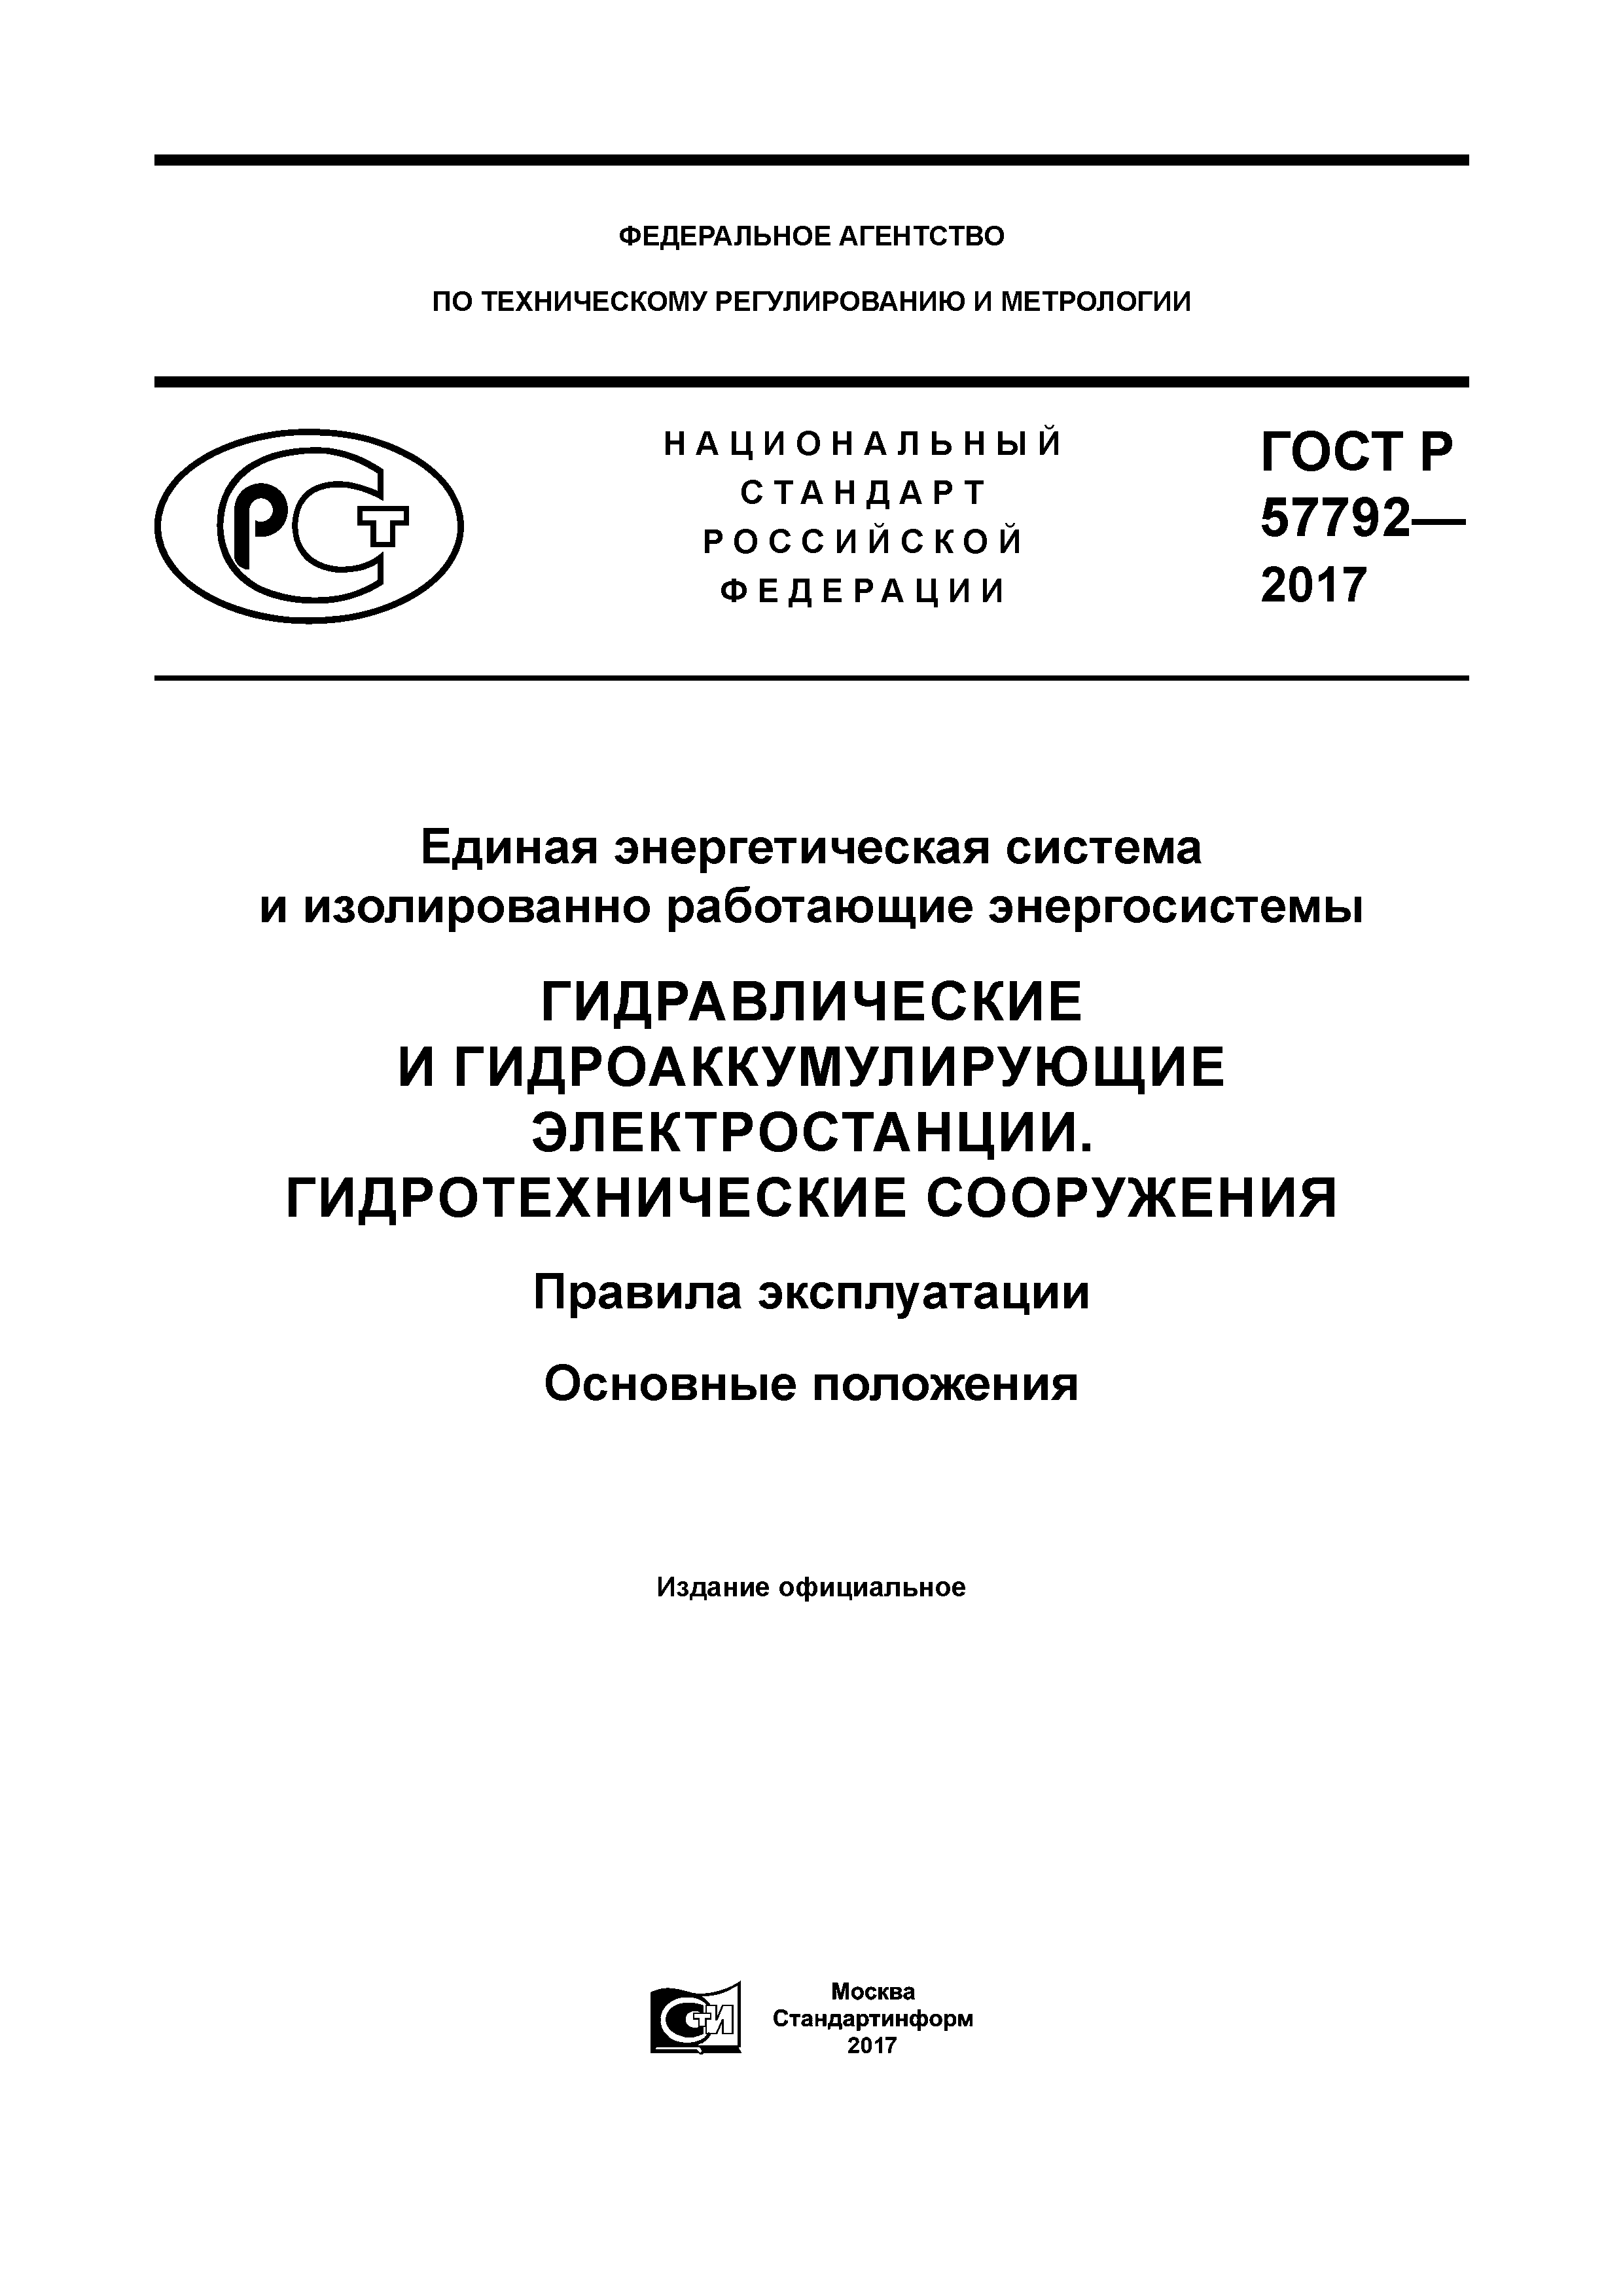 ГОСТ Р 57792-2017